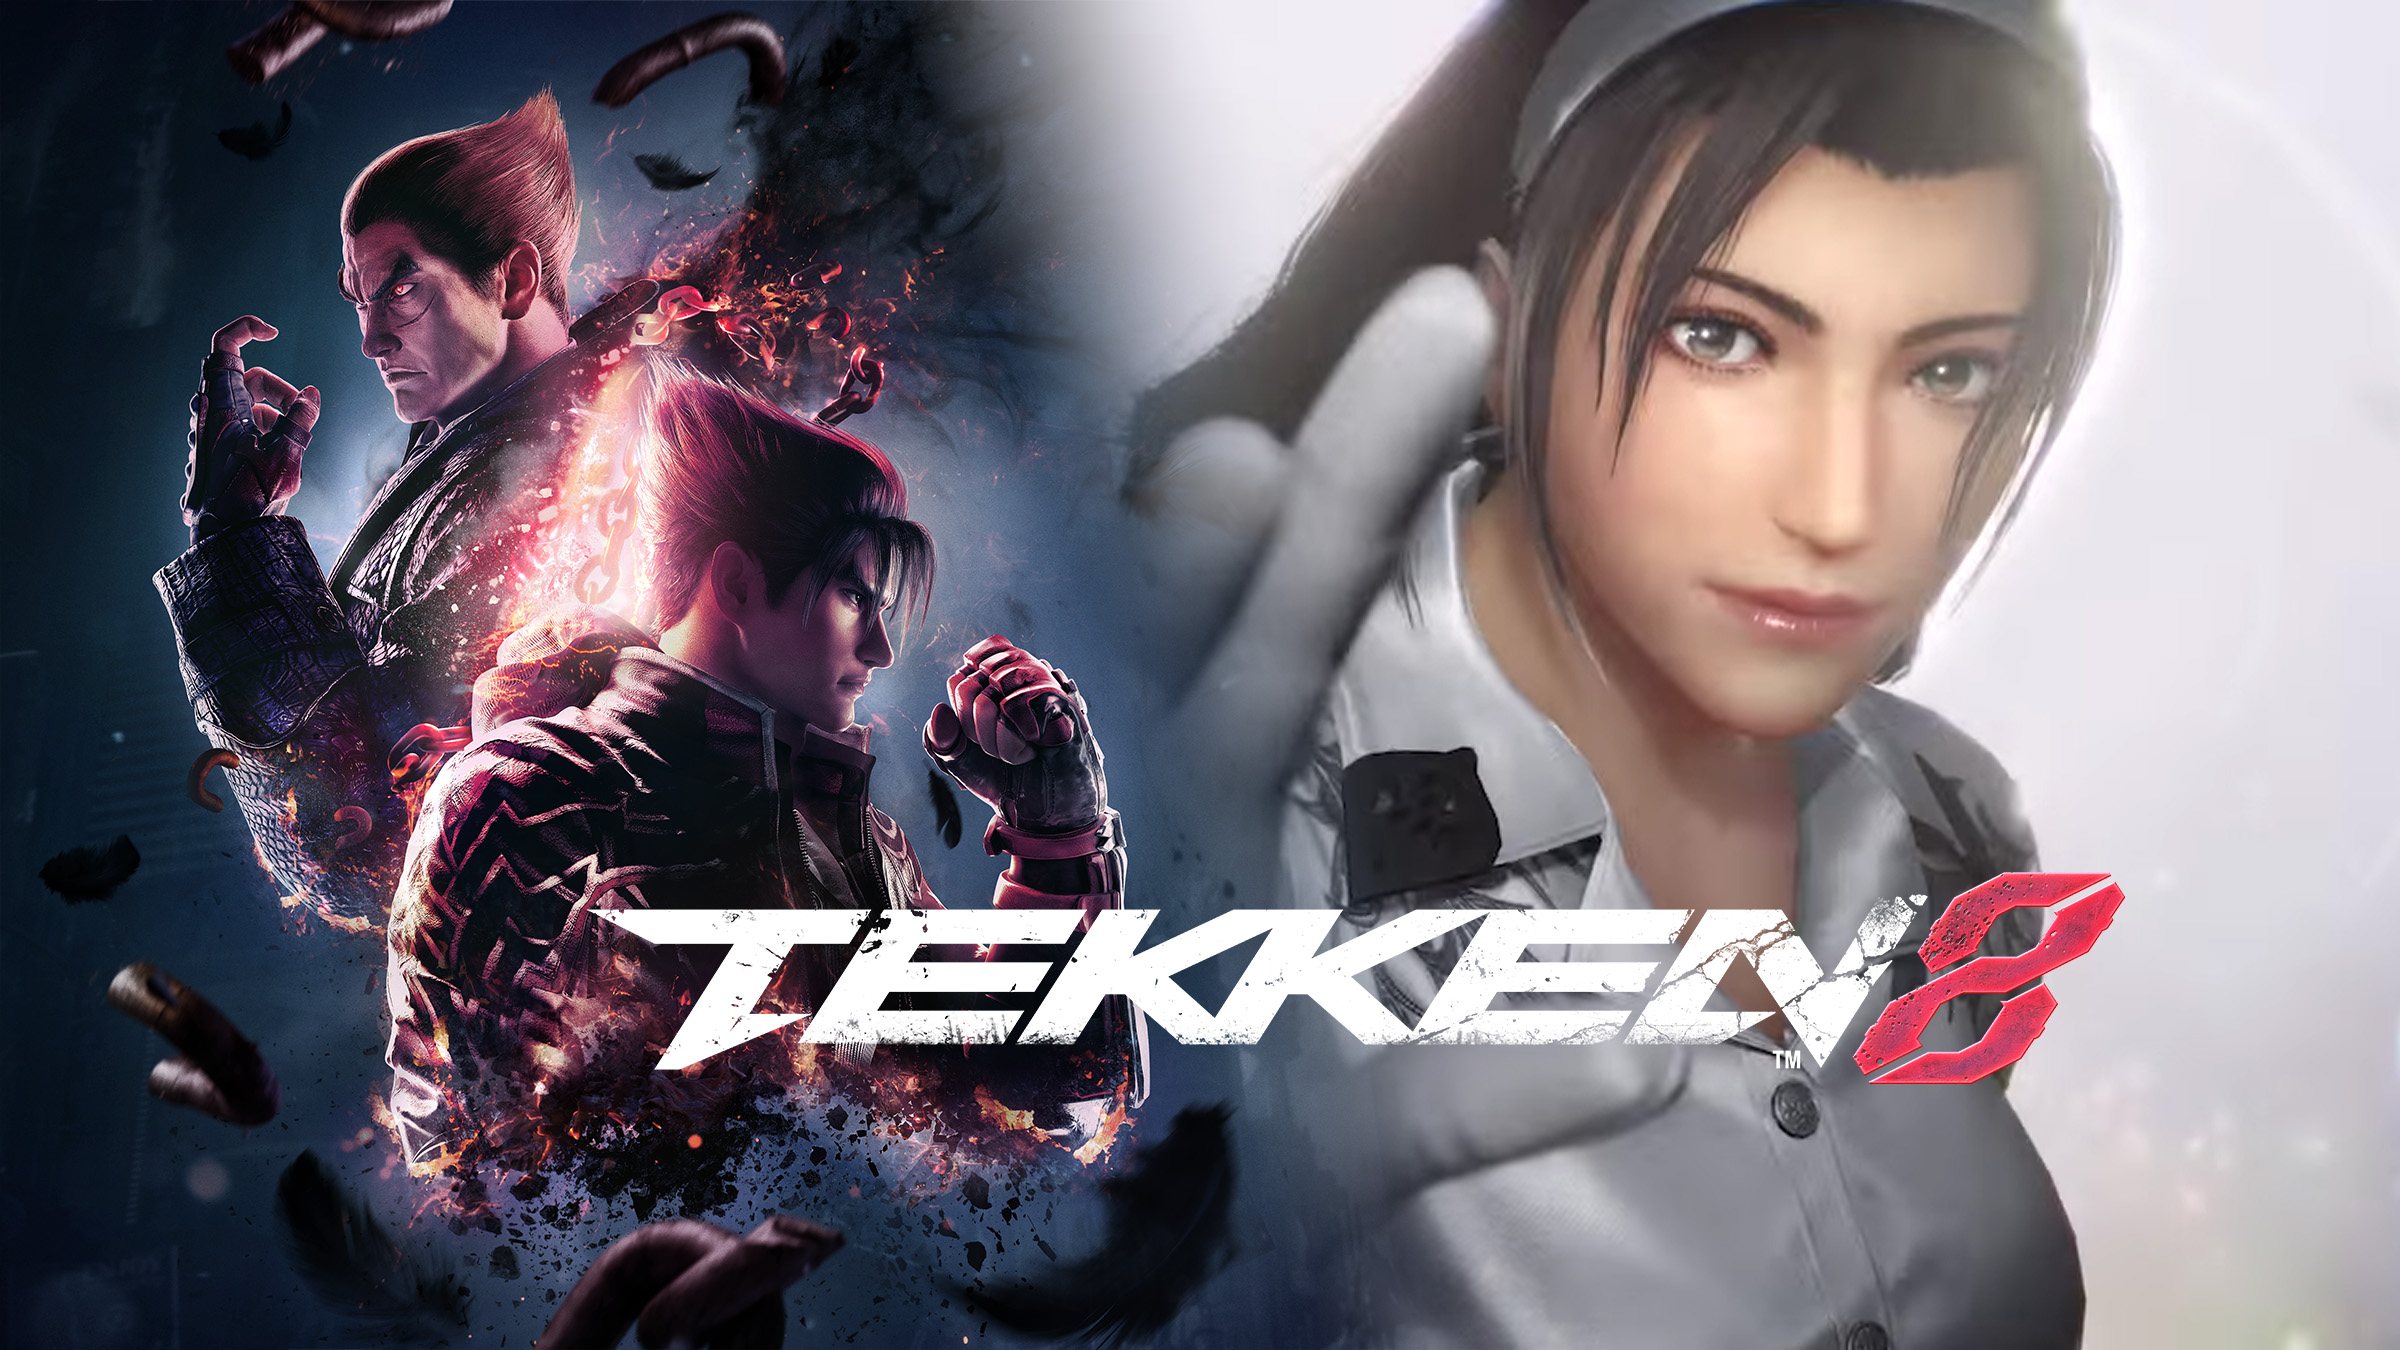 🎮 Tekken News